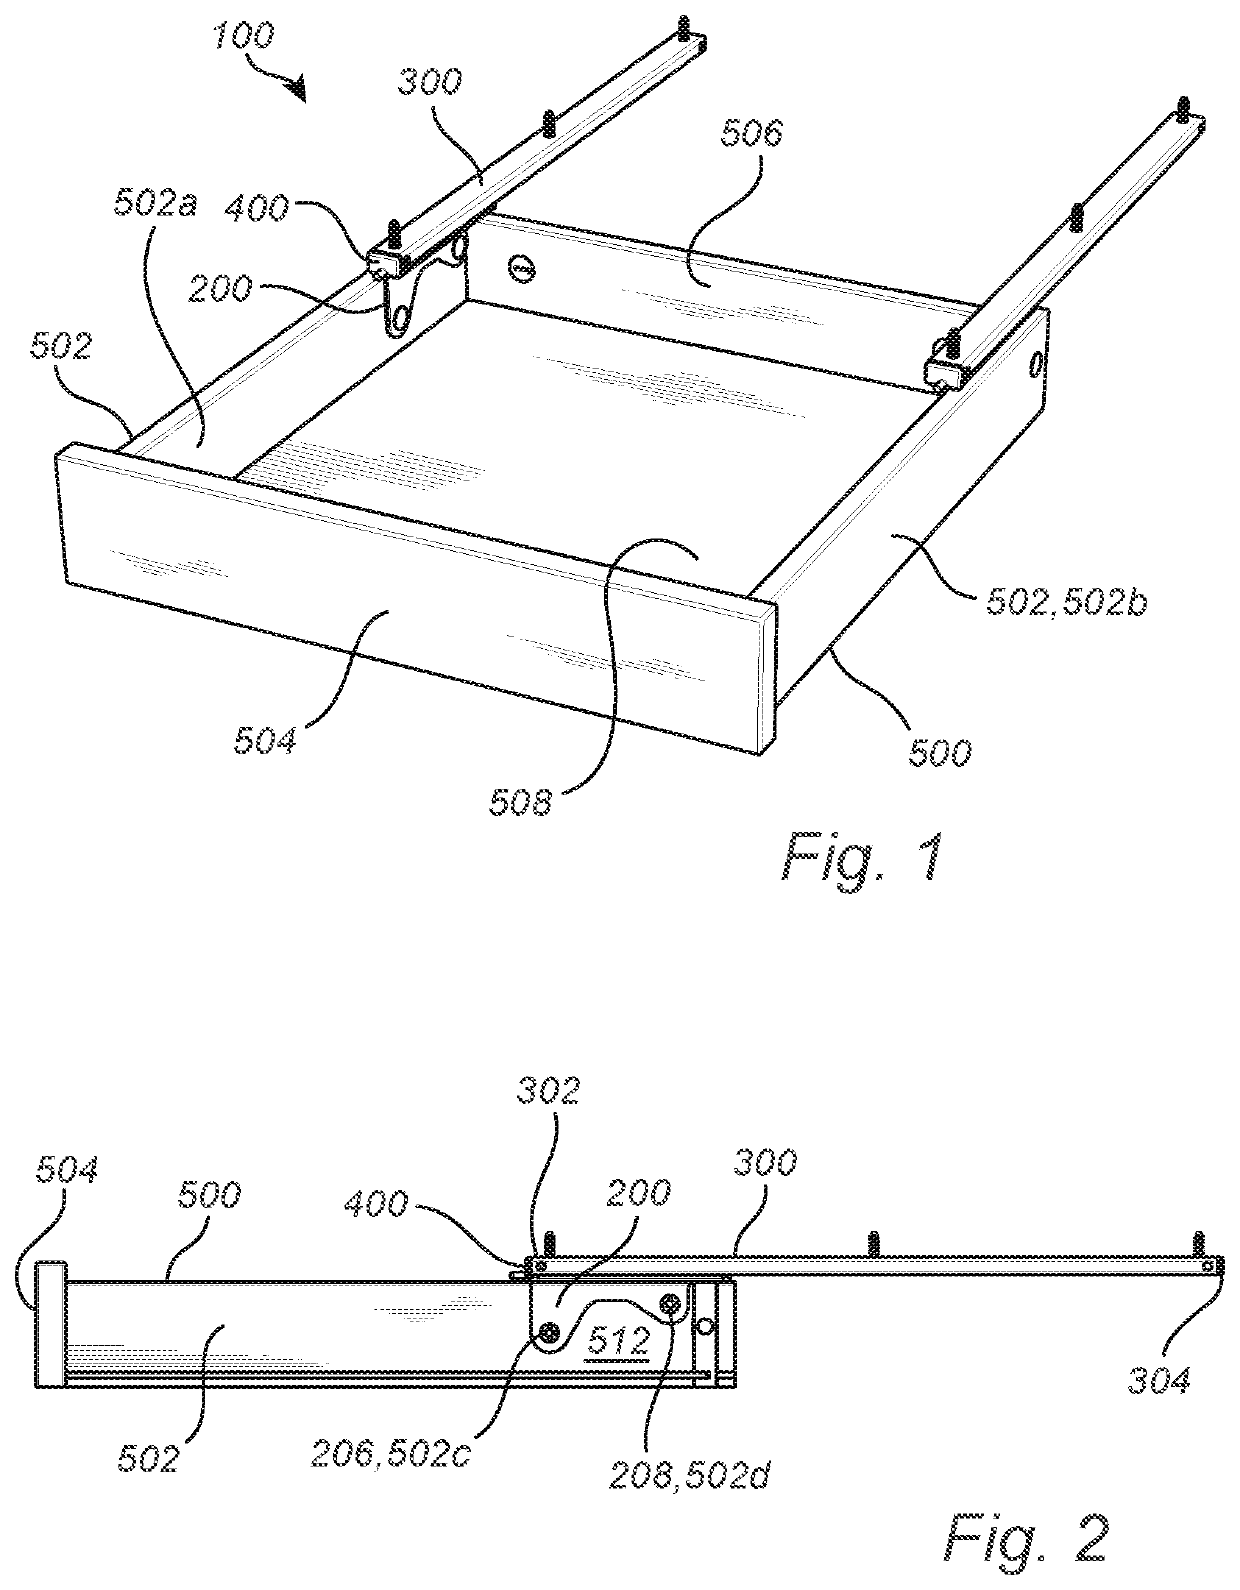 A drawer sliding system